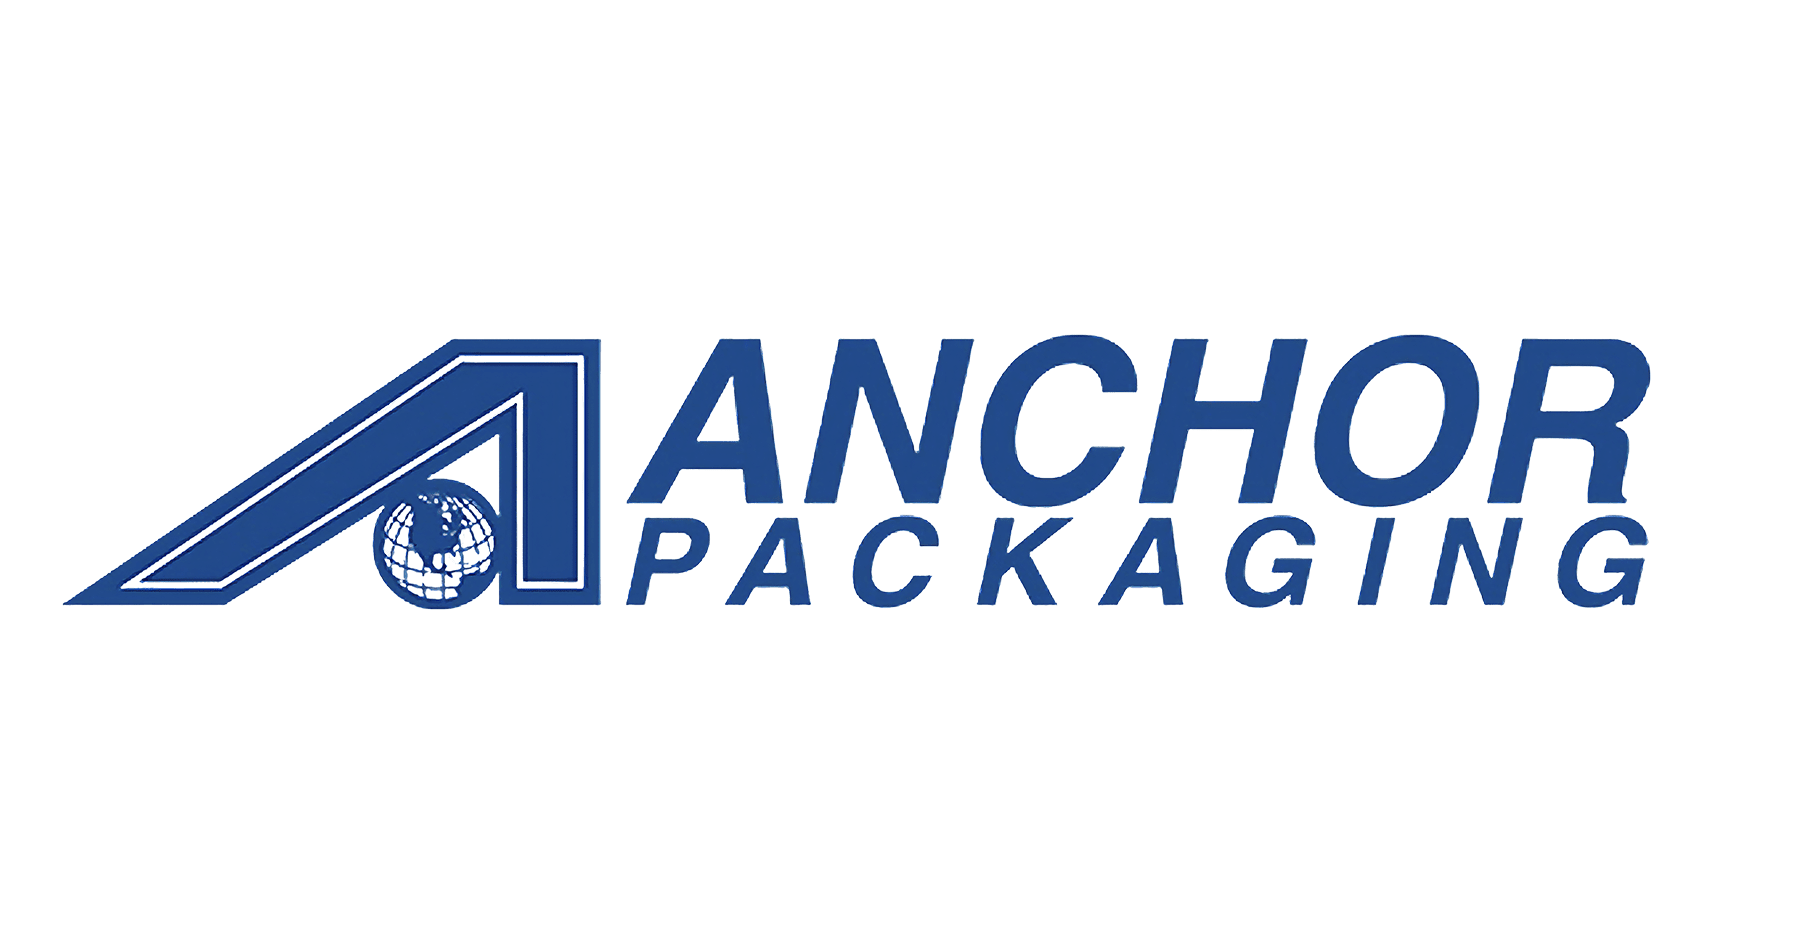 Anchor packaging logo